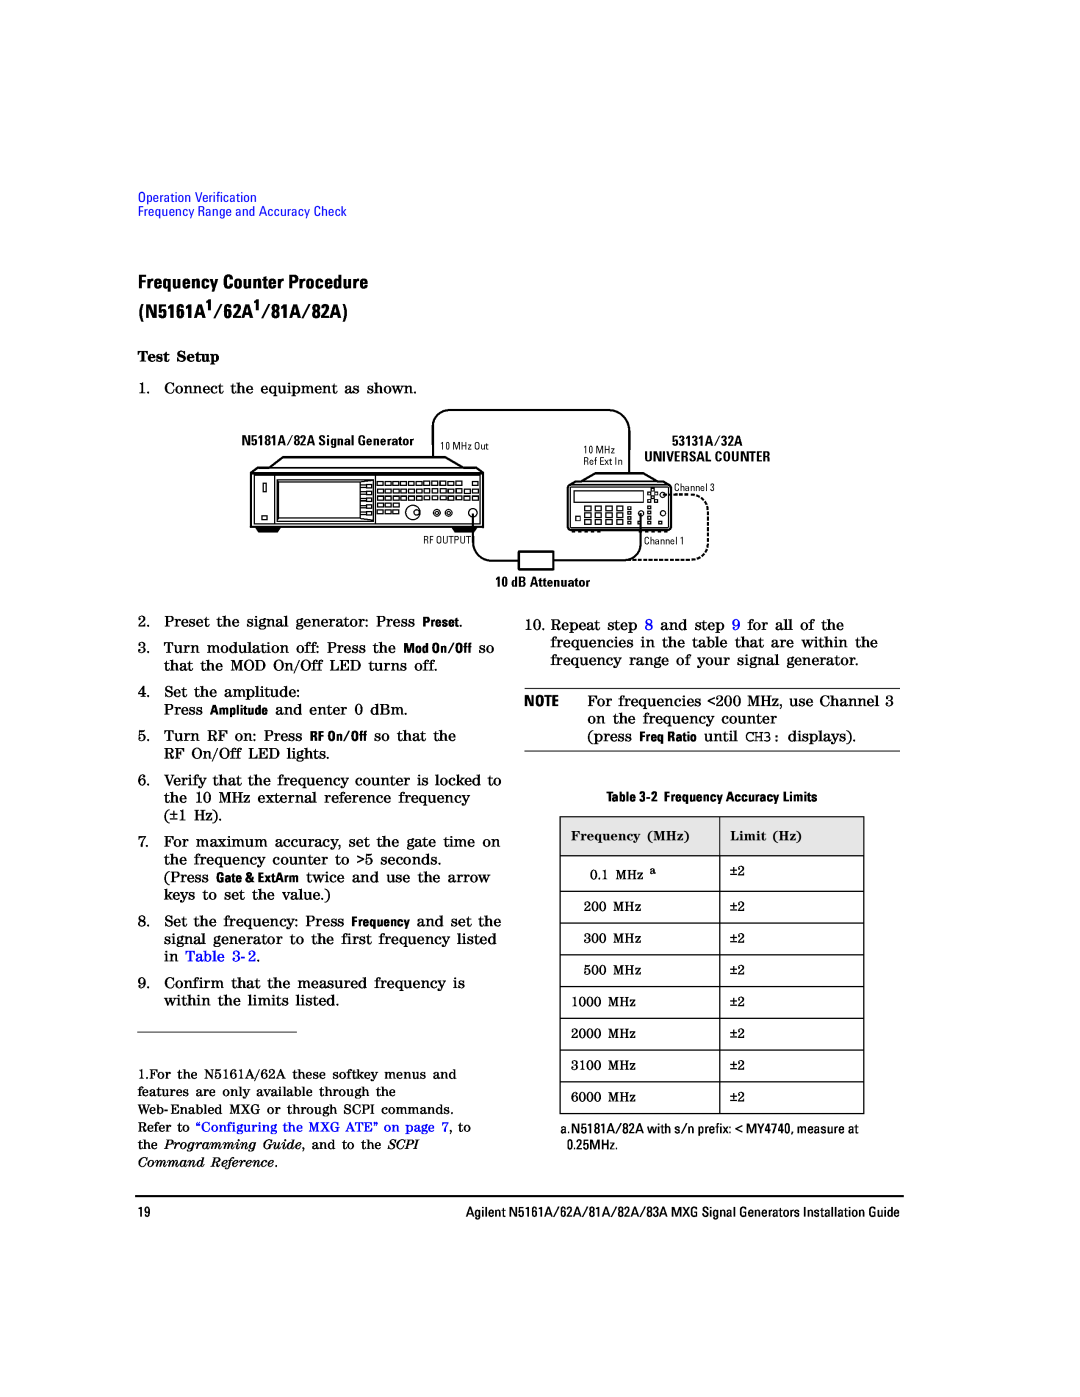 Agilent Technologies 83A manual Frequency Counter Procedure N5161A1/62A1/81A/82A, Test Setup 